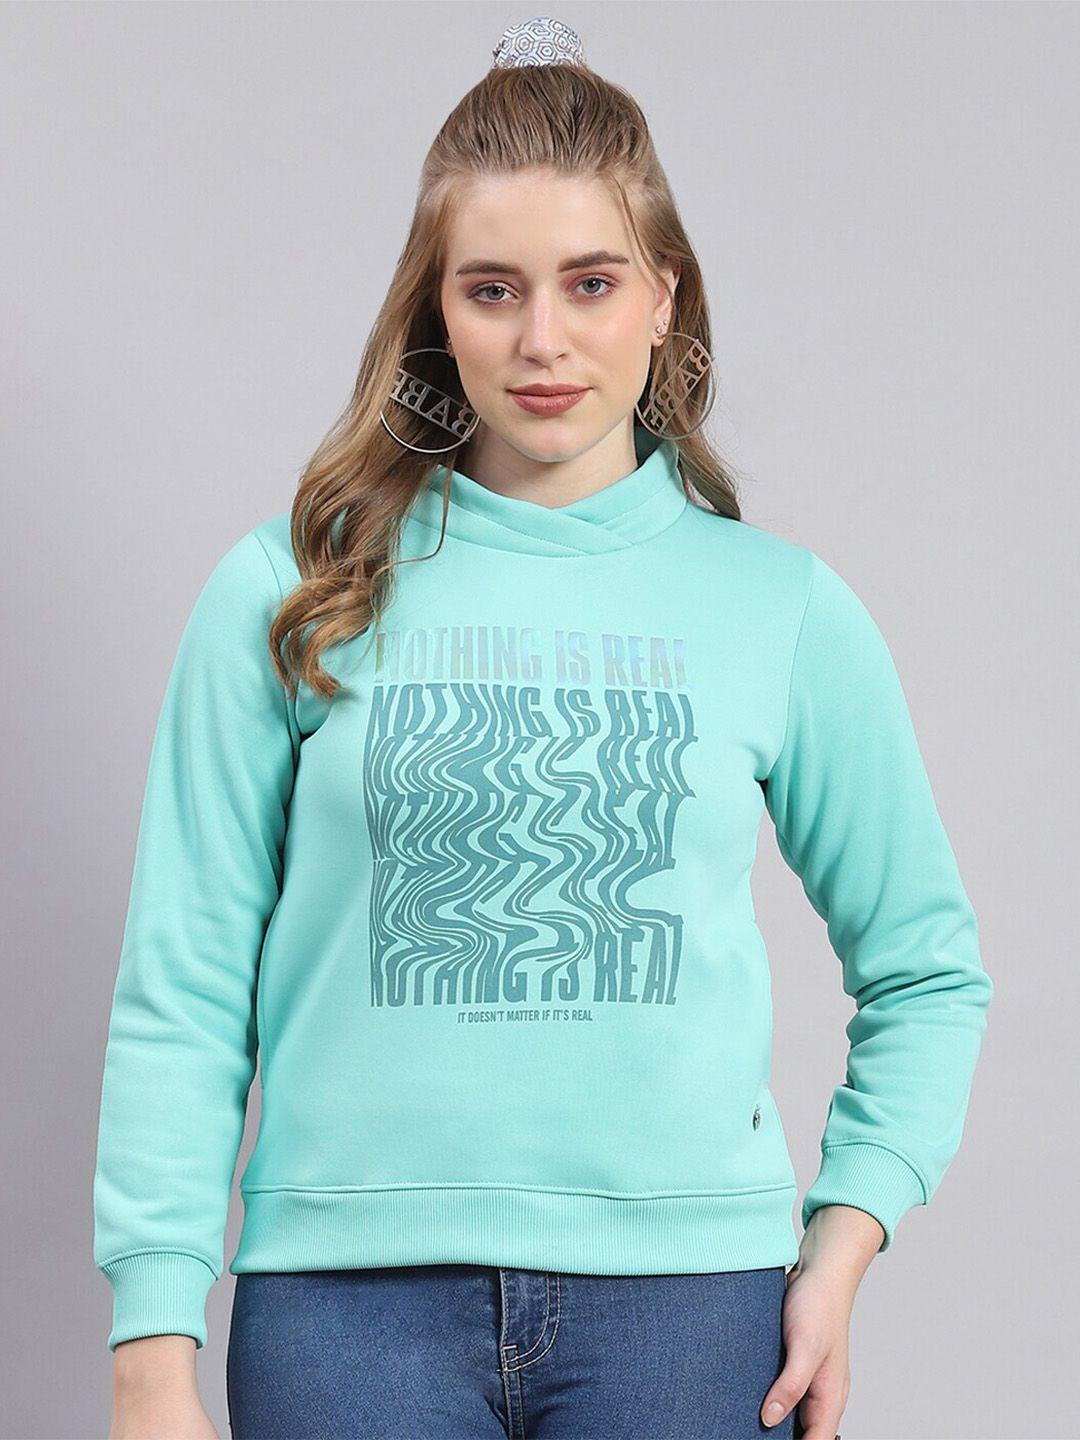 monte-carlo-graphic-printed-high-neck-sweatshirt